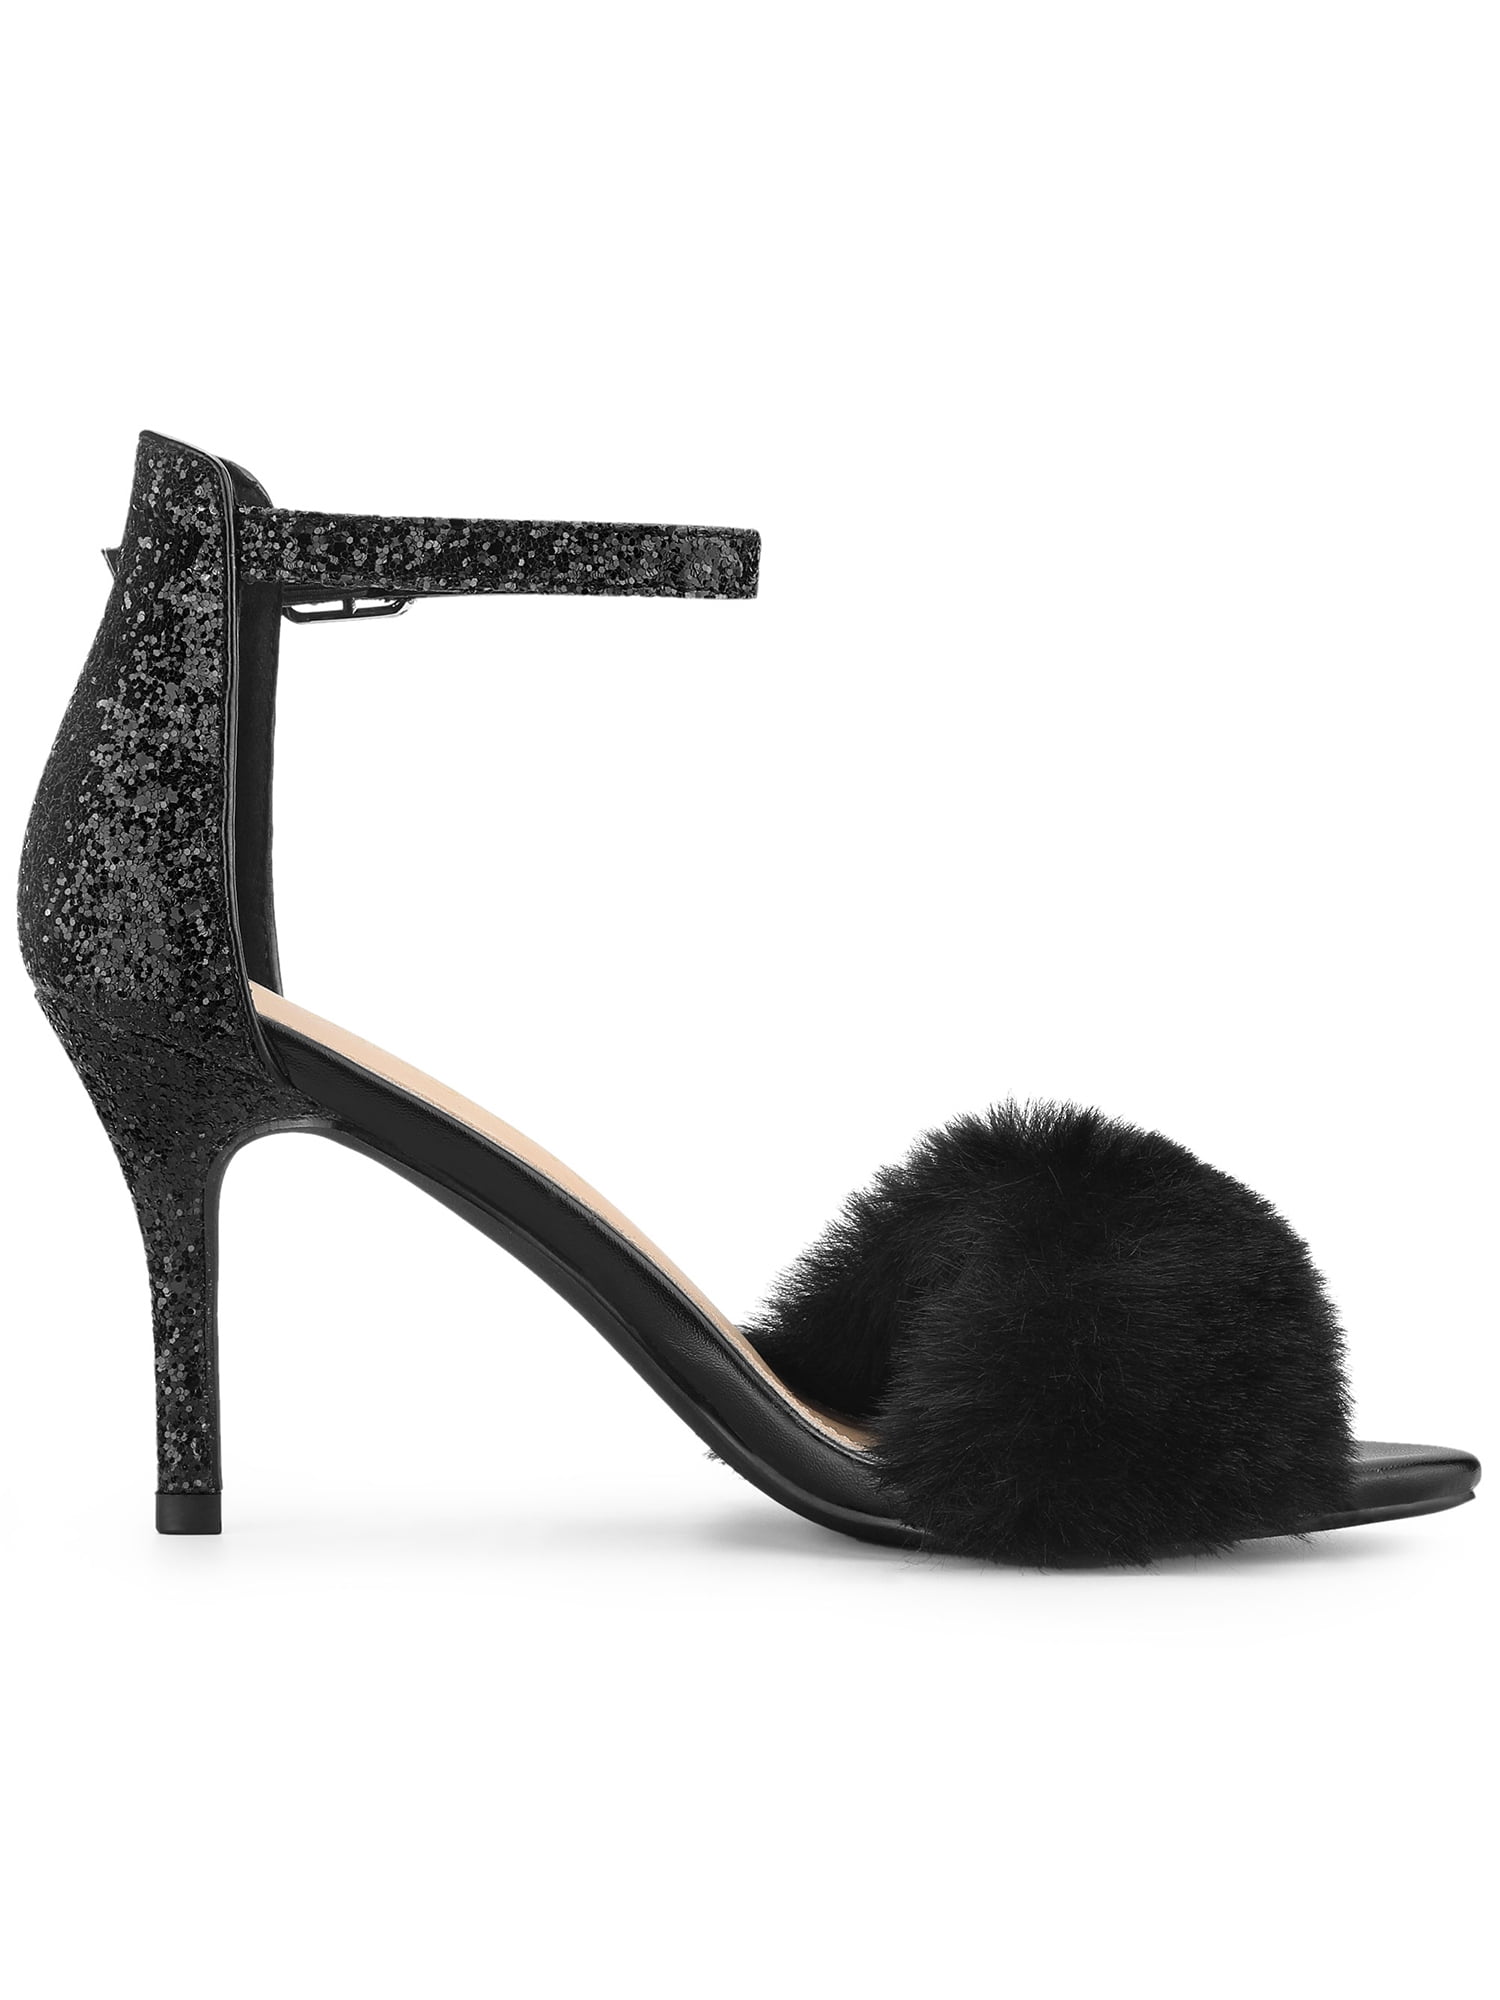 Ladies Black Patent Faux Suede High Stiletto Heel Slingback Court Shoes Size 3-8 